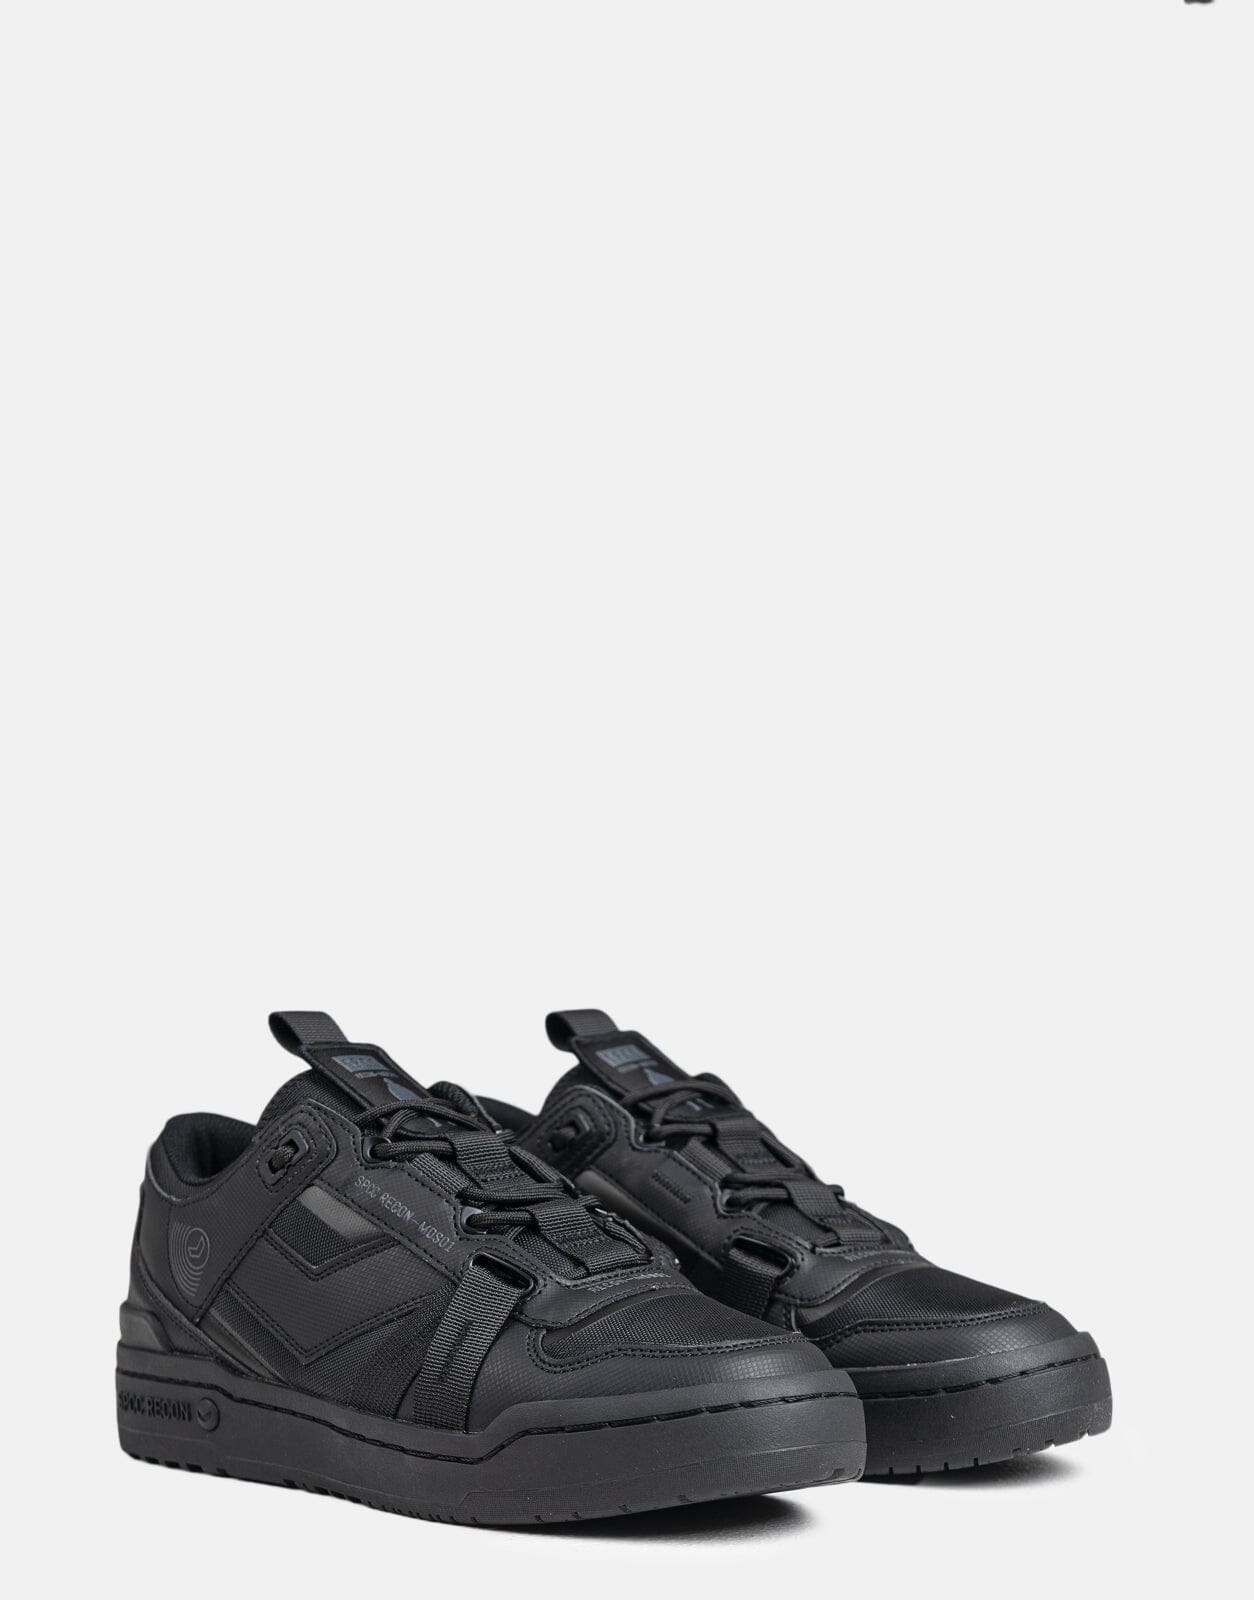 SPCC Recon Lo Black Sneakers